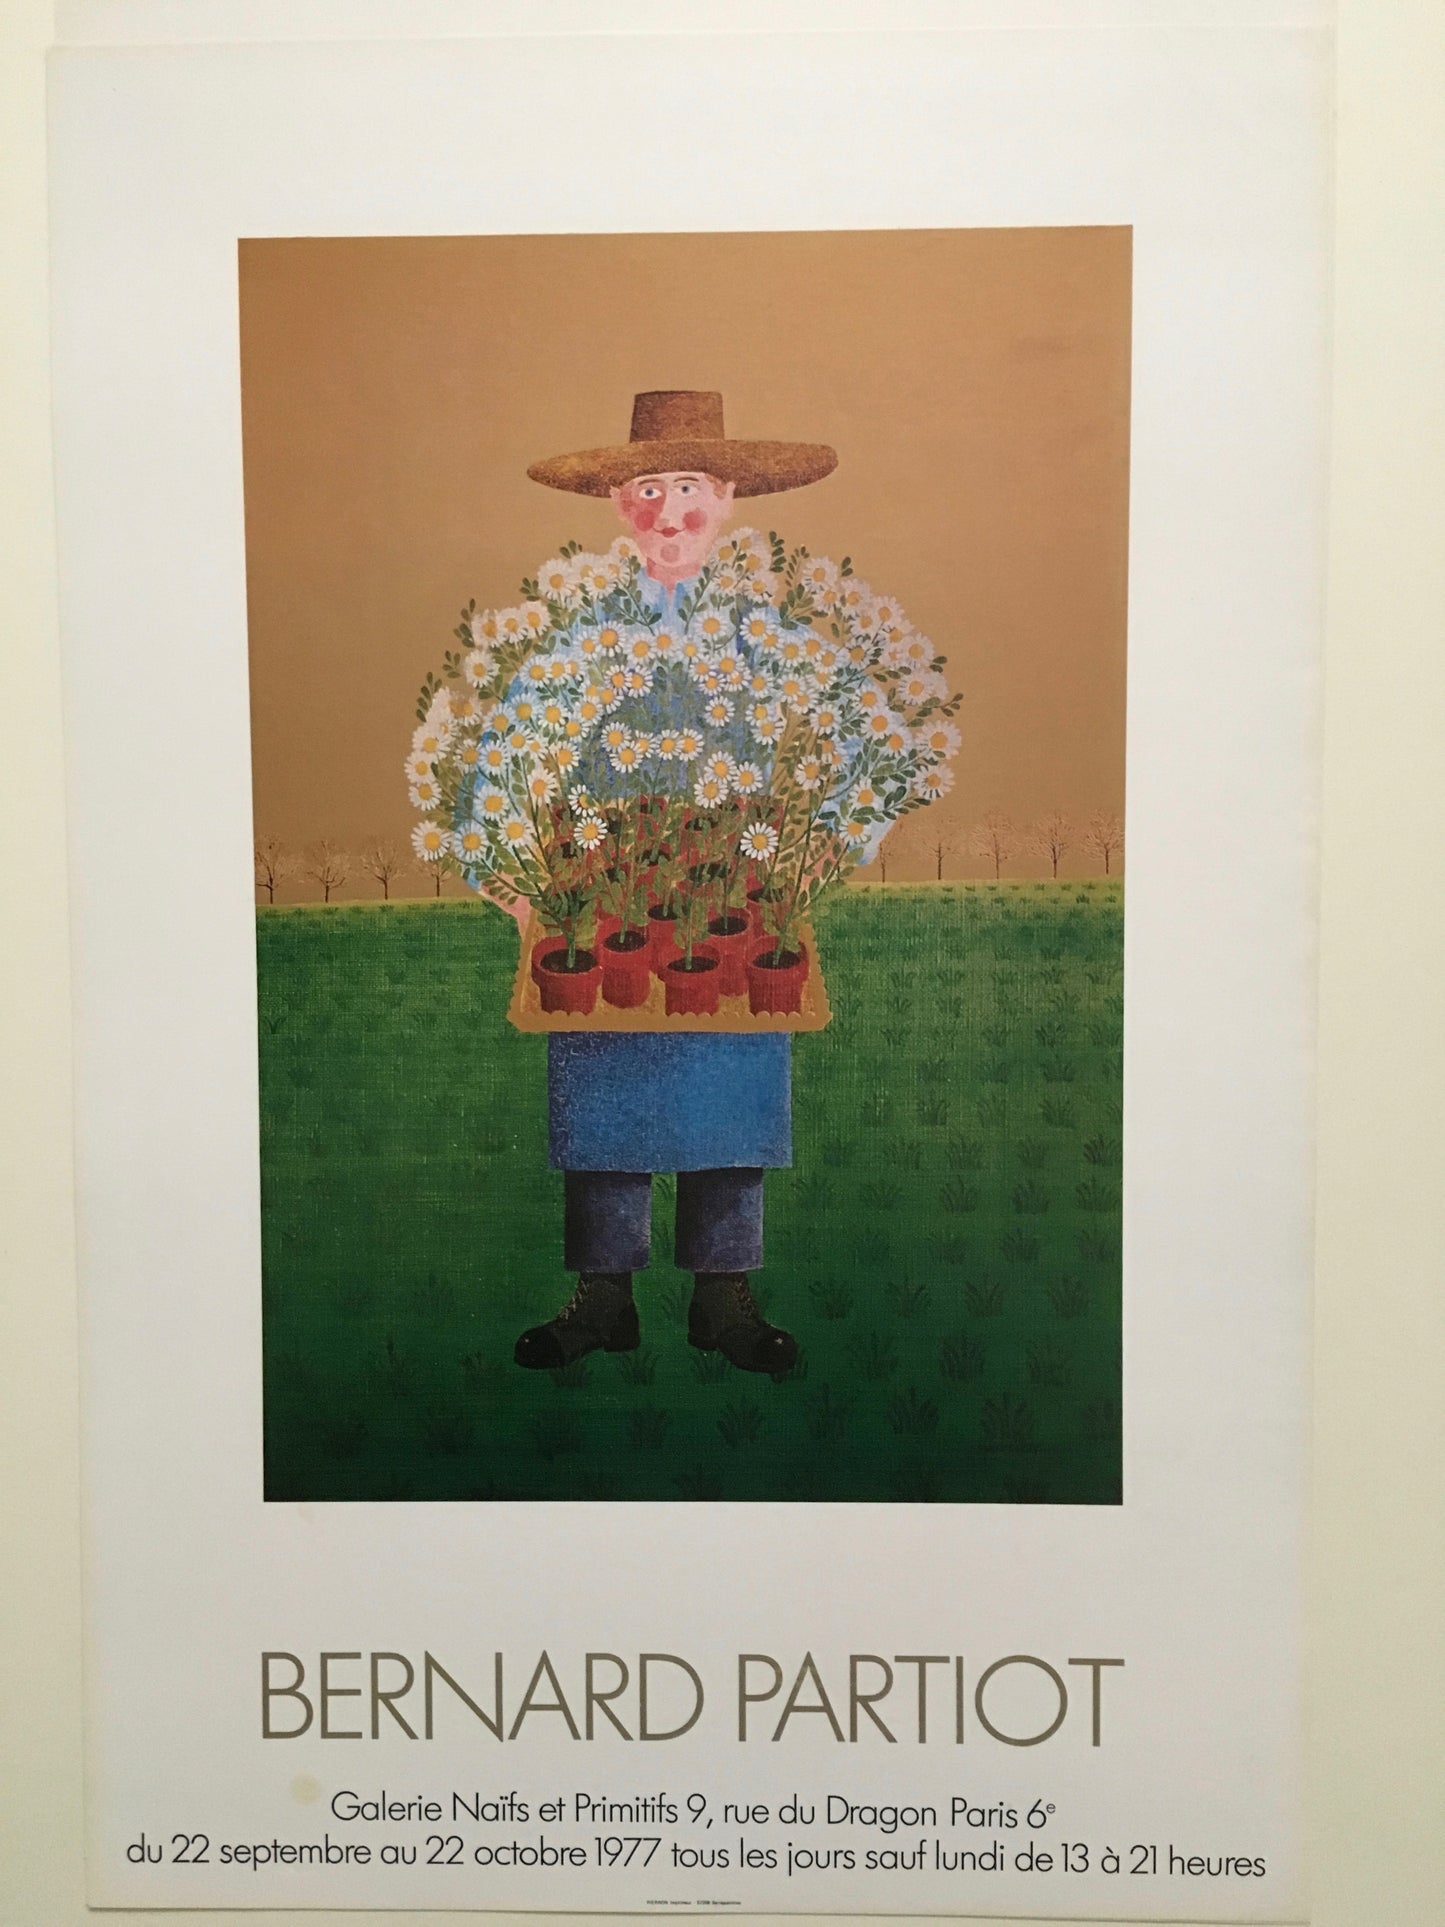 Bernard Patriot, "Flower Vendor", 1977 (15.75w x 23.25t)